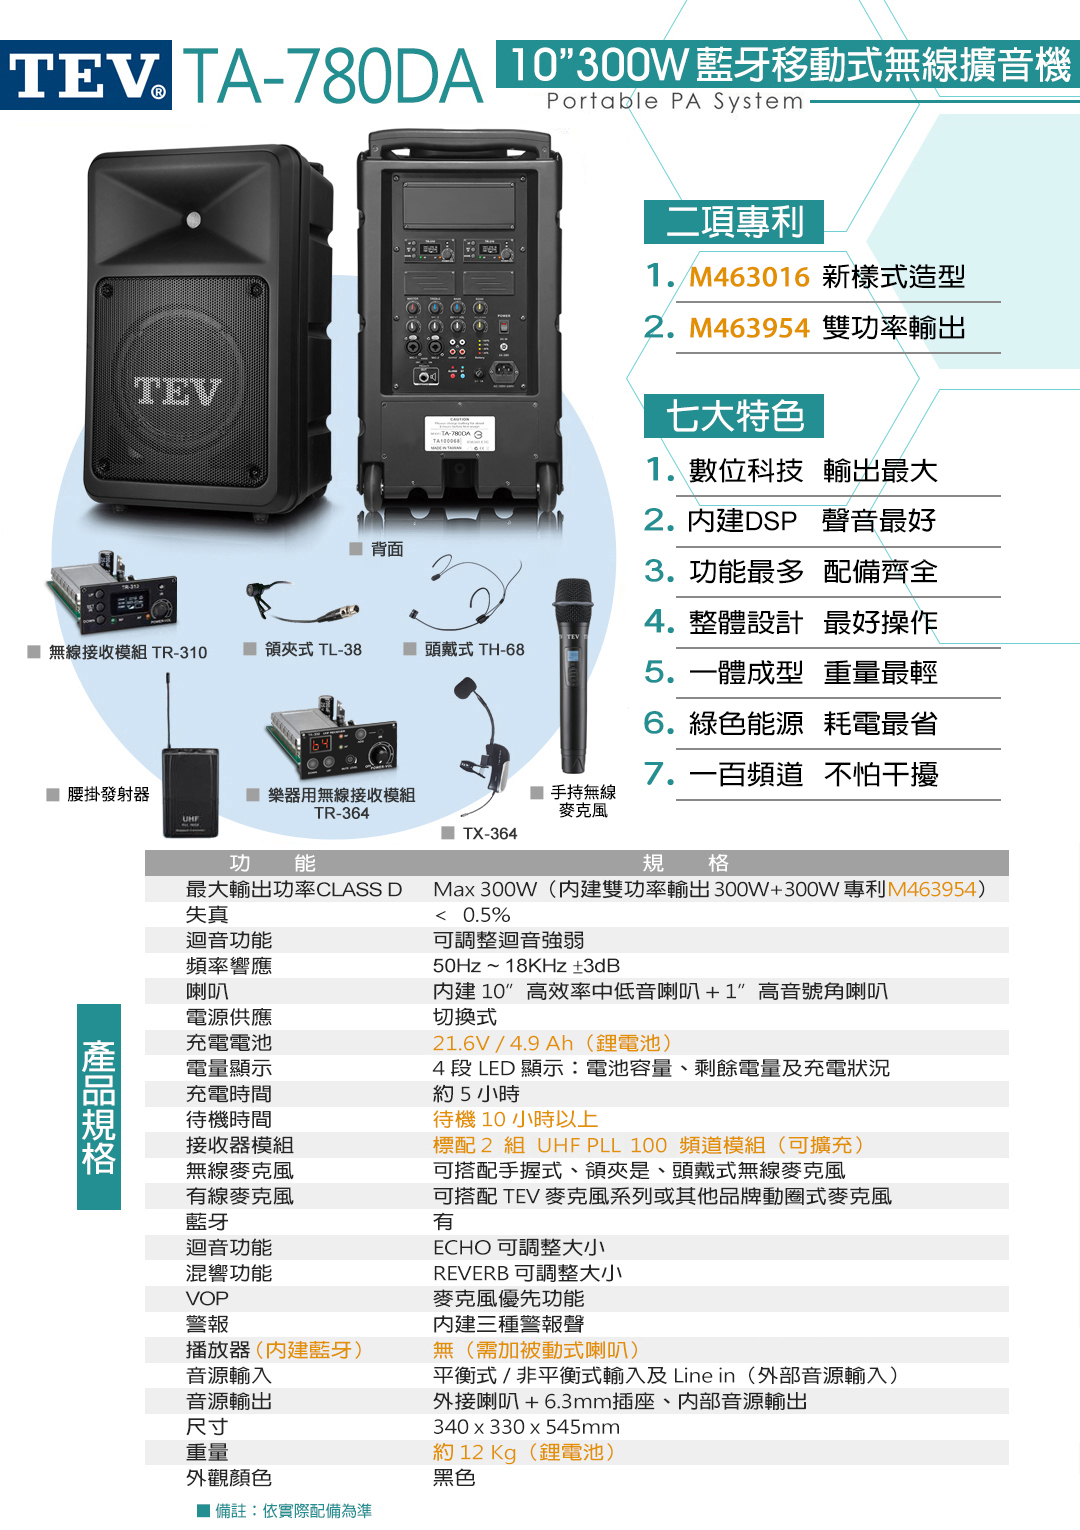 TA-780DA 10 300W 藍牙移動式無線擴音機Portable PA SystemTEV二項專利1.M463016 新樣式造型2. M463954 雙功率輸出七大特色1.數位科技 輸出最大2.內建DSP 聲音最好 背面3.功最多 配備齊全4.整體設計 最好操作 無線接收模組 TR-310  式 TL-38 頭戴式 TH-685.一體成型 重量最輕6.綠色能源 耗電最省7.一百頻道 不怕干擾TB-300 樂器用無線接收模組TR-364TM-8100TX-364功能最大輸出功率CLASS D失真迴音功能頻率響應喇叭電源供應充電電池電量顯示充電時間待機時間接收器模組無線麥克風有線麥克風藍牙迴音功能混響功能VOP警報播放器(內建藍牙)音源輸入音源輸出尺寸重量外觀顏色 備註:依實際配備為準規格Max 300W(內建雙功率輸出300W+300W專利M463954) 0.5%可調整迴音強弱50Hz~18KHz±3dB內建10高效率中低音喇叭+1高音號角喇叭切換式11.1V/5200mAh(電池)x24 段 LED 顯示:電池容量、剩餘電量及充電狀況約5小時待機10小時以上標配2 組 UHF PLL 100 頻道模組(可擴充)可搭配手握式、領夾是、頭戴式無線麥克風可搭配 TEV 麥克風系列或其他品牌動圈式麥克風有ECHO 可調整大小REVERB 可調整大小麥克風優先功能内建三種警報聲無(需加被動式喇叭)平衡式/非平衡式輸入及 Line in (外部音源輸入)外接喇叭+6.3mm插座、內部音源輸出340 x 330 x 545mm約13Kg(電池)黑色